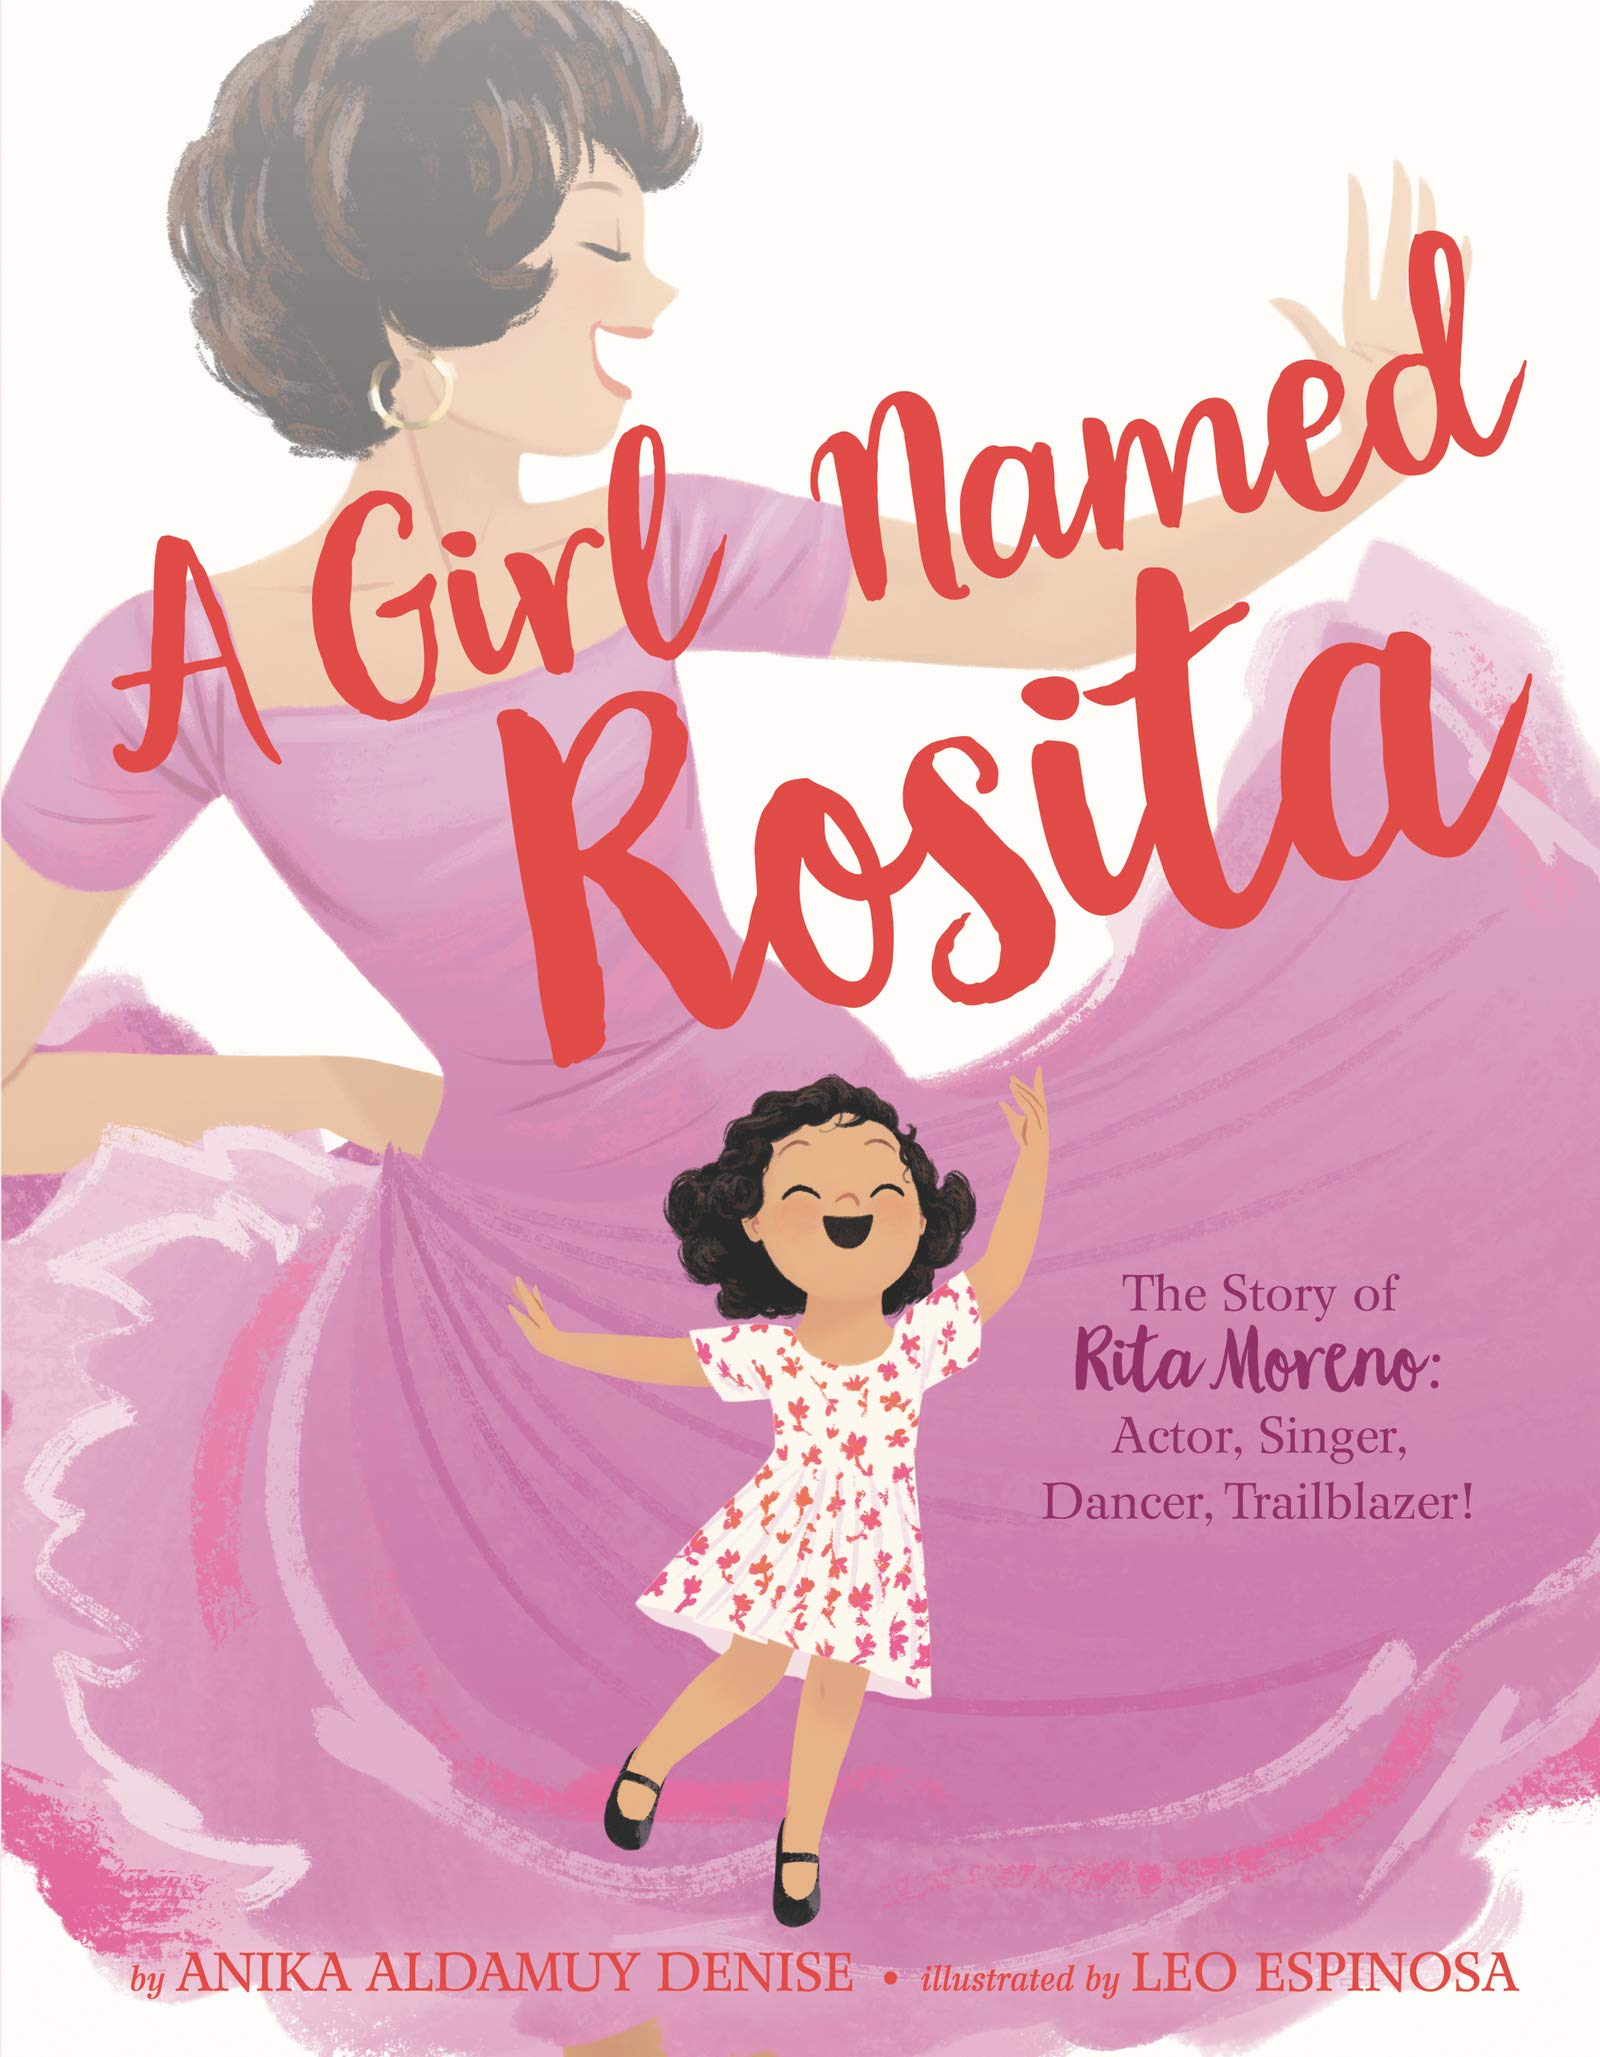 A Girl Named Rosita: The Story of Rita Moreno: Actor, Singer, Dancer, Trailblazer!